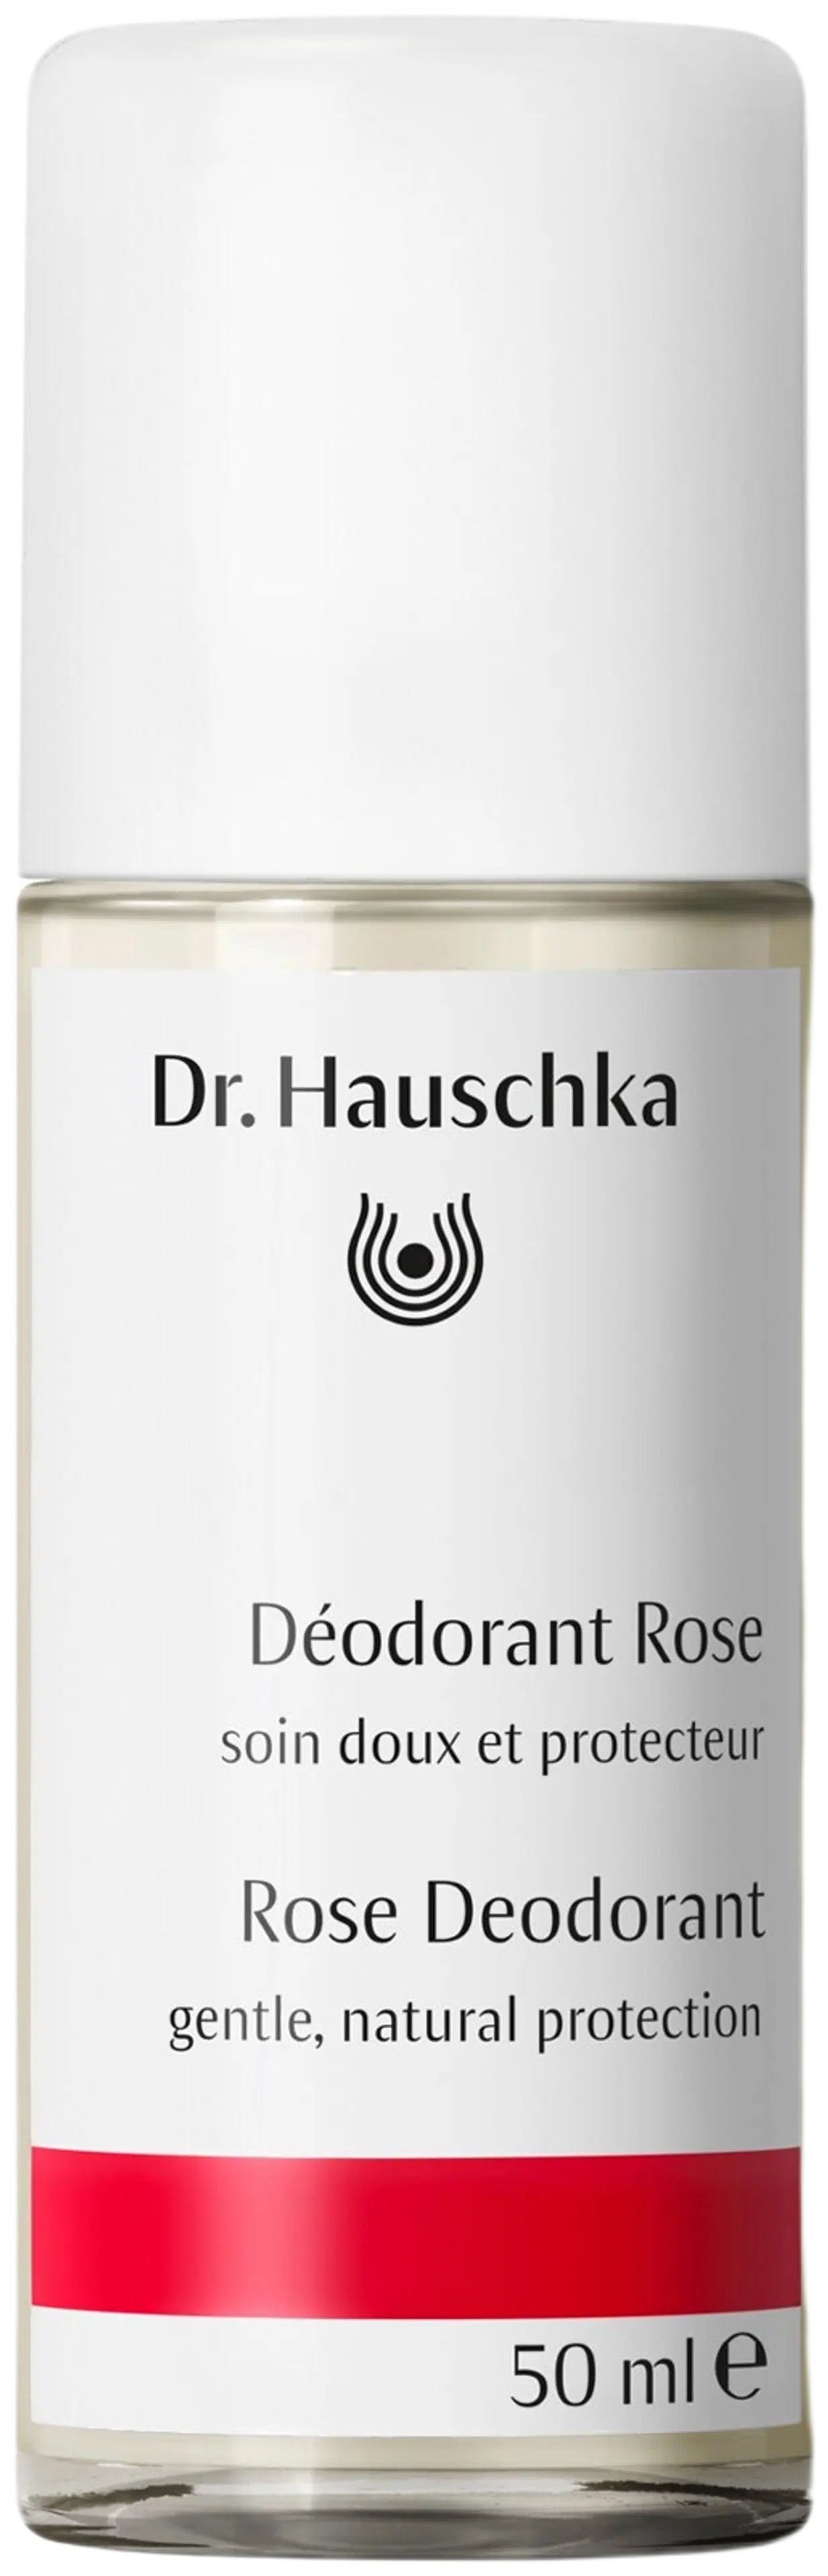 Dr. Hauschka Rose Deodorant Ruusu deodorantti 50 ml